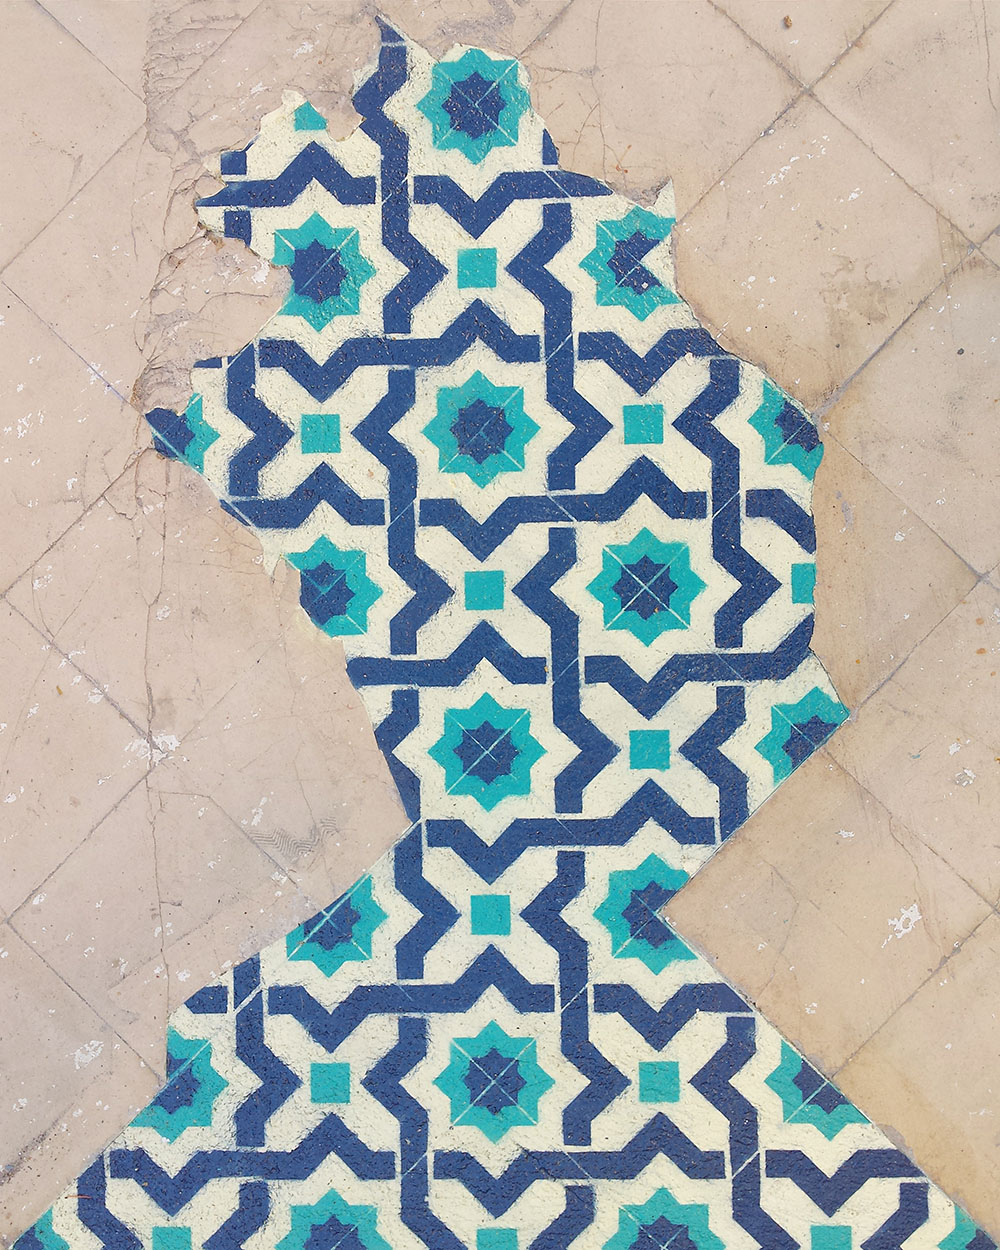 FLOOR tile tiles suelo Piso patron mosaico pattern floors